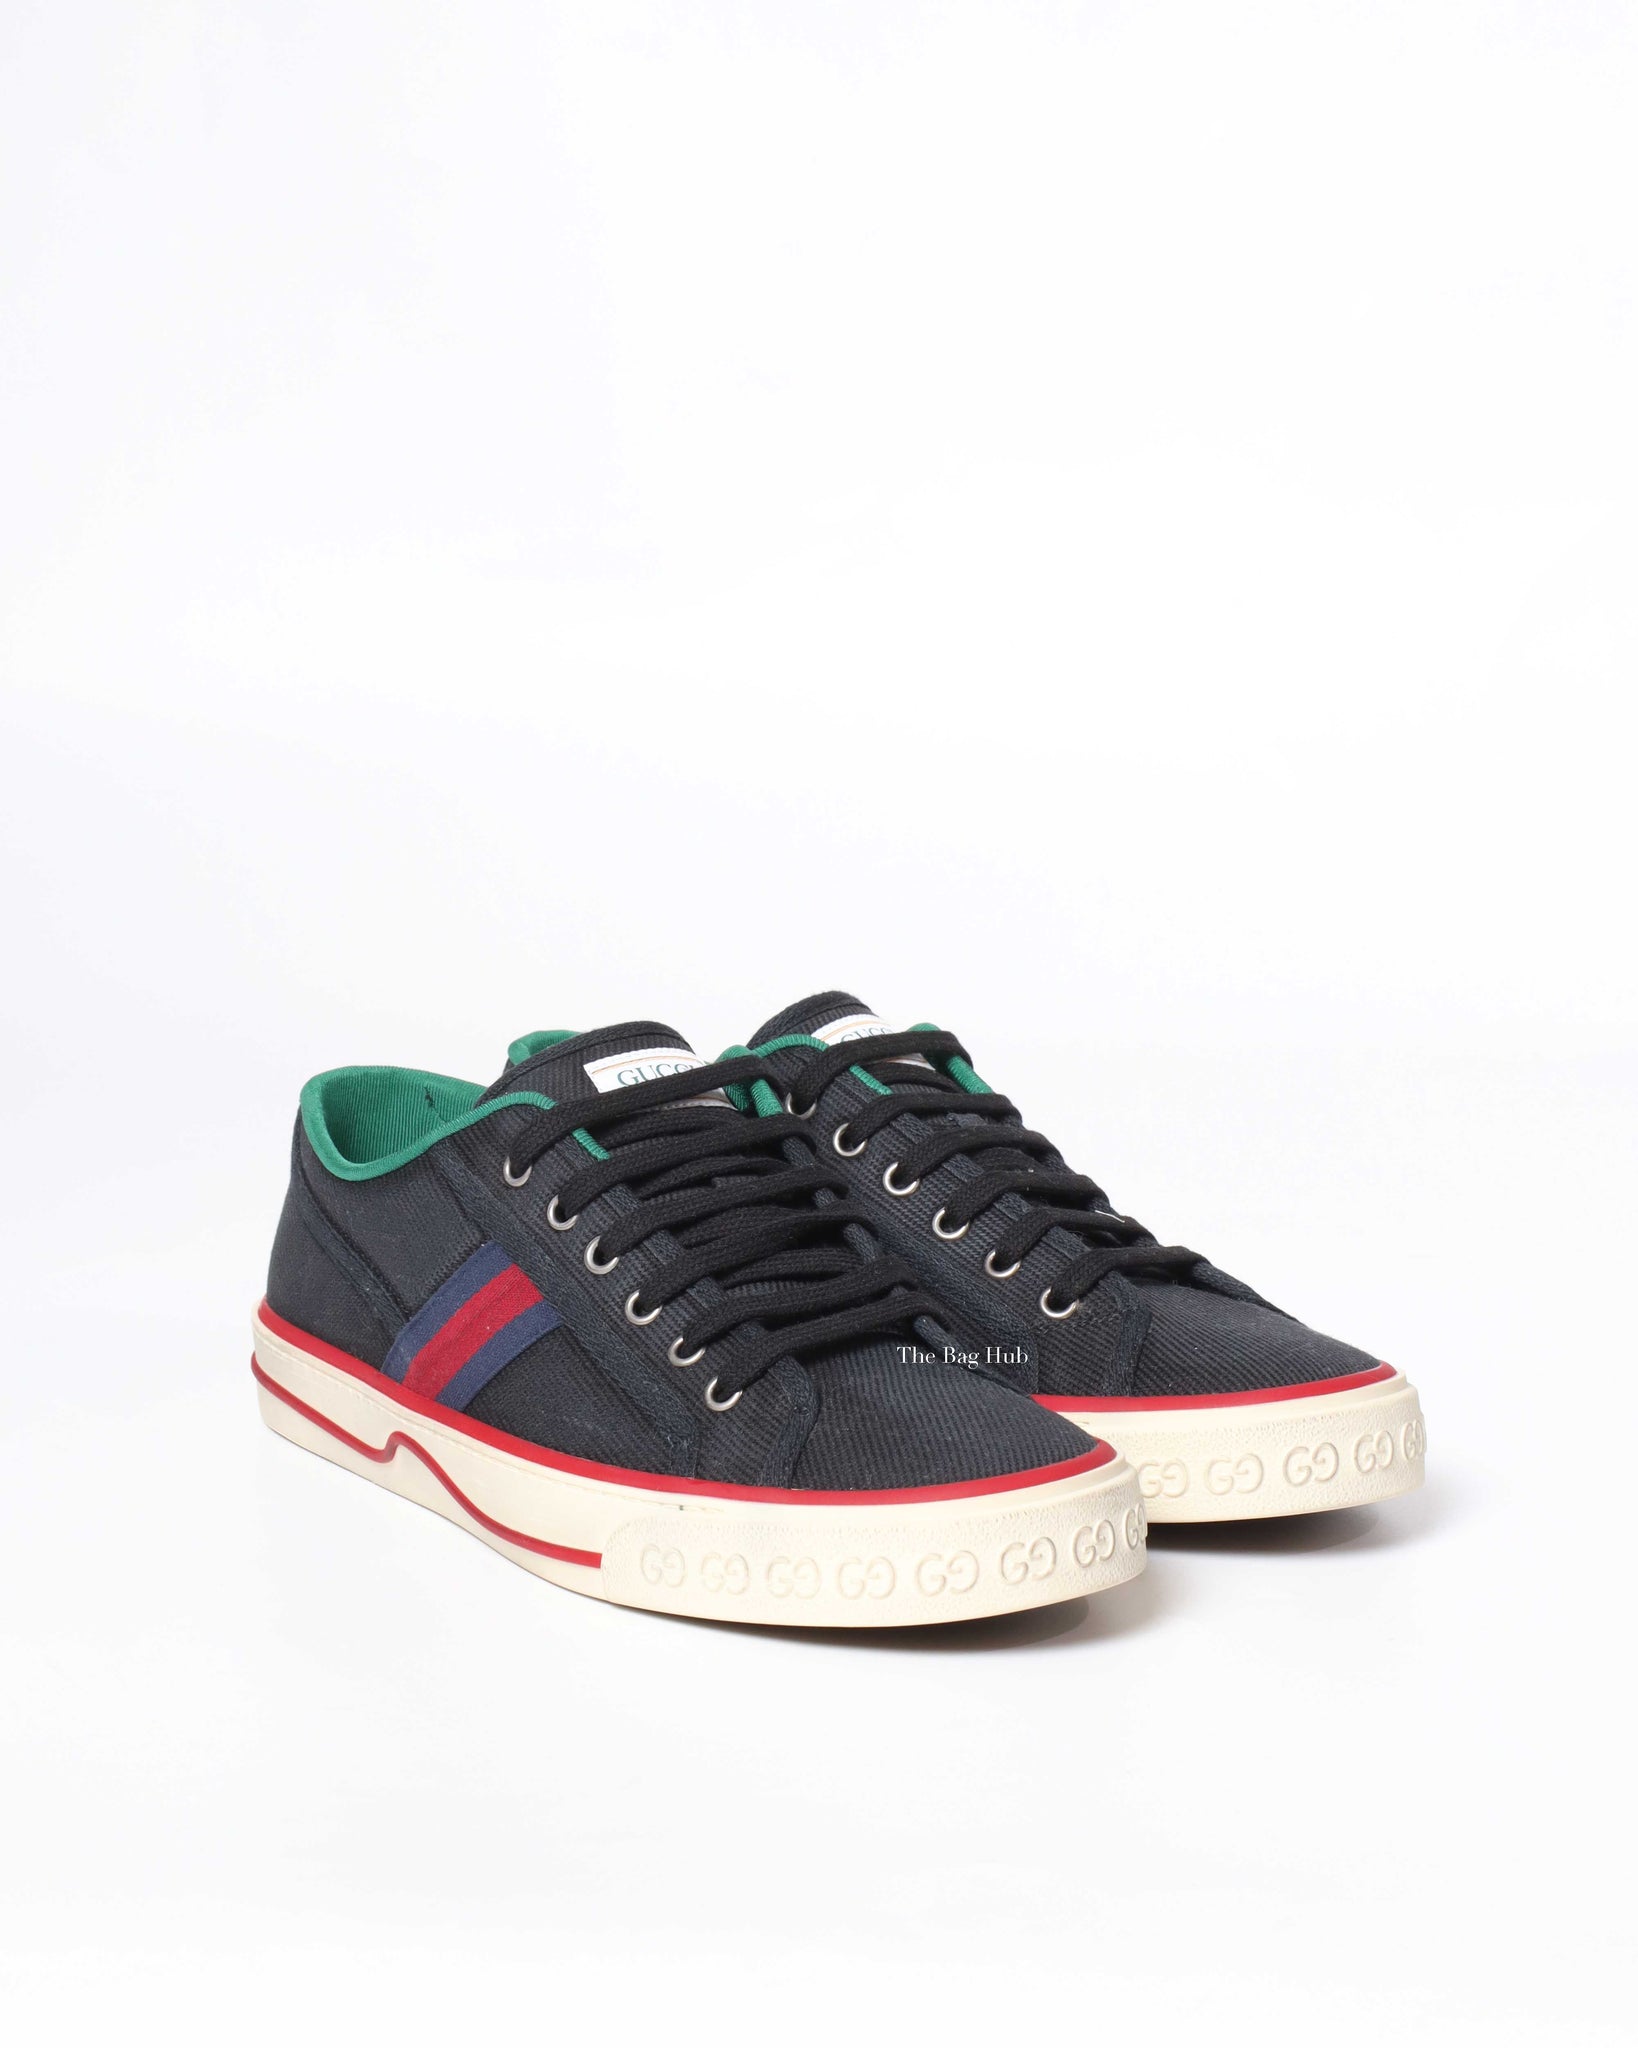 Gucci Black Web Canvas Men's Tennis Sneakers Size 38.5-2